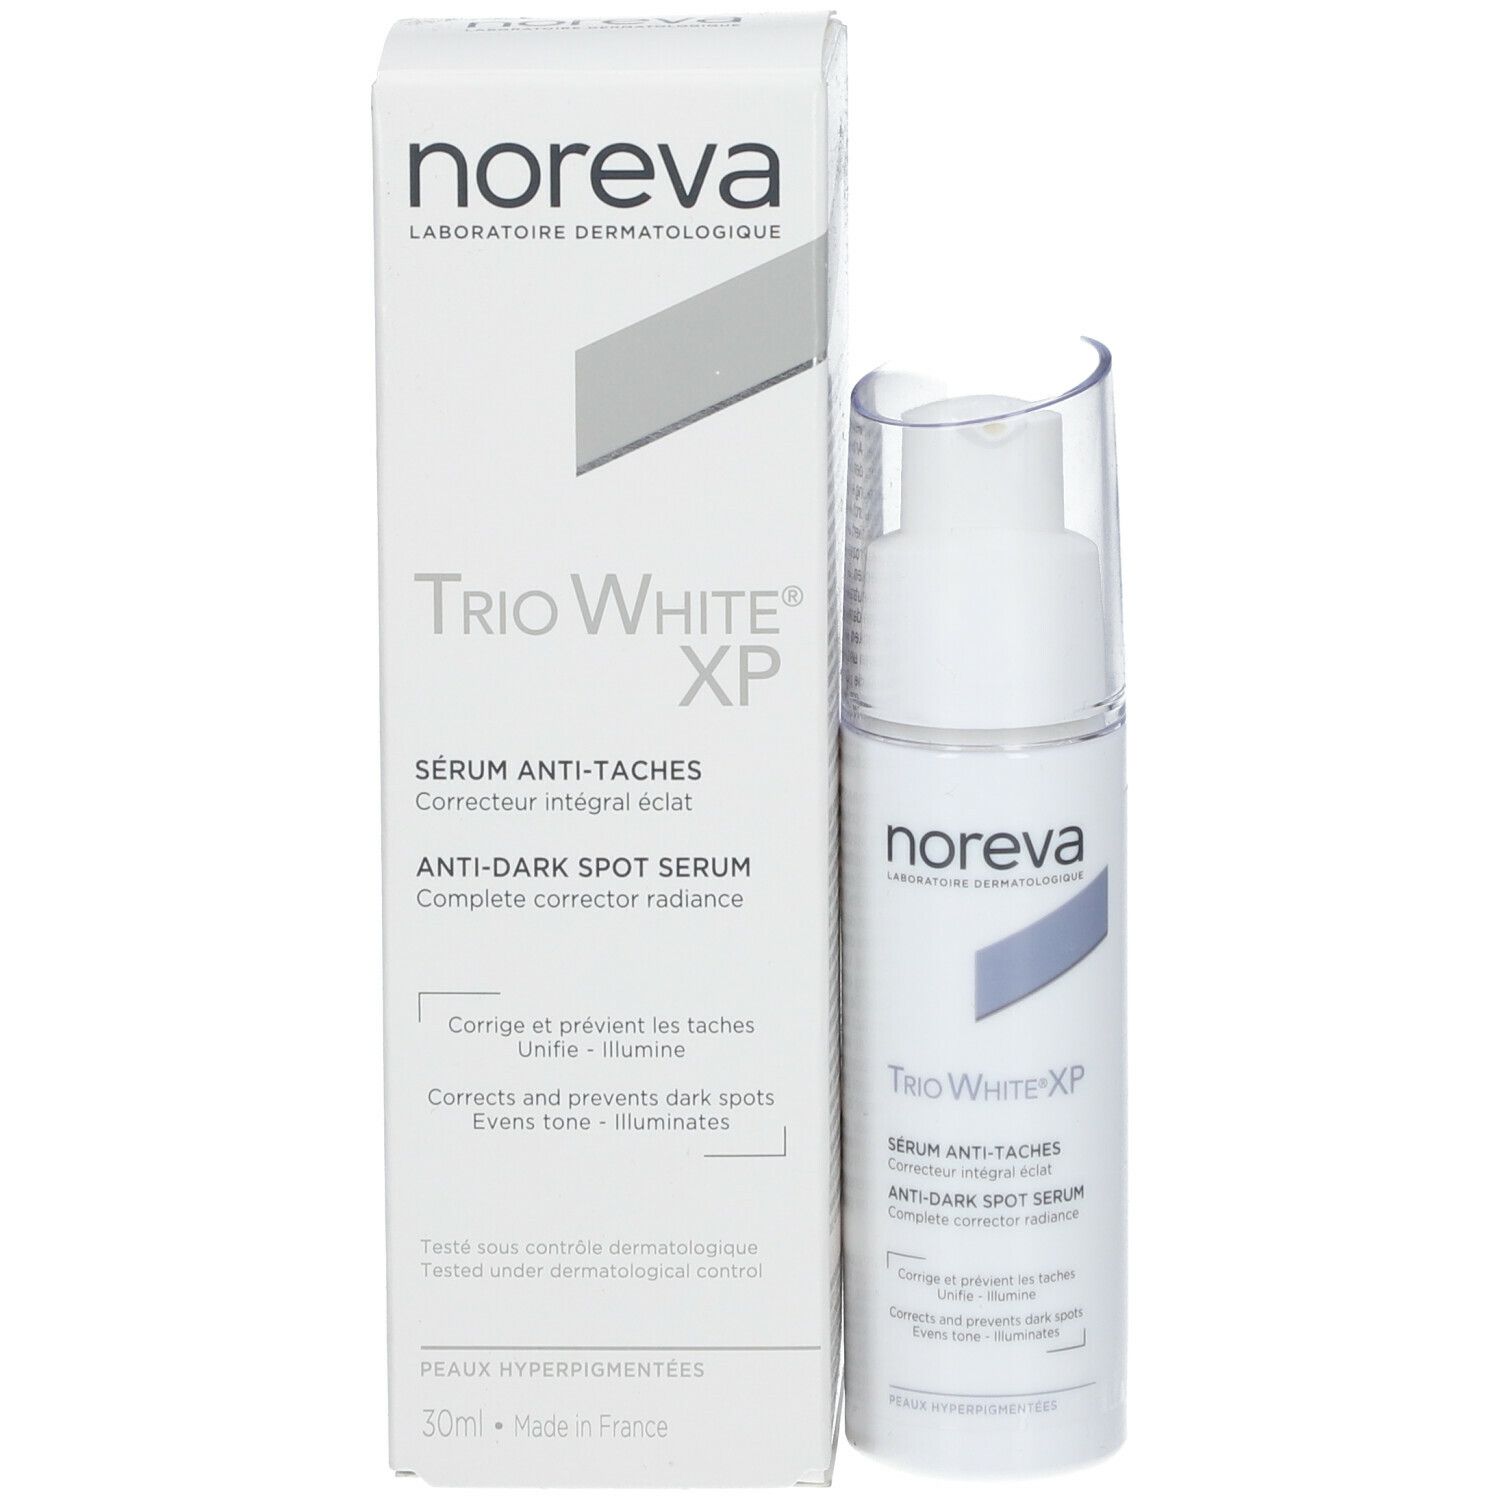 noreva TRIO WHITE® XP